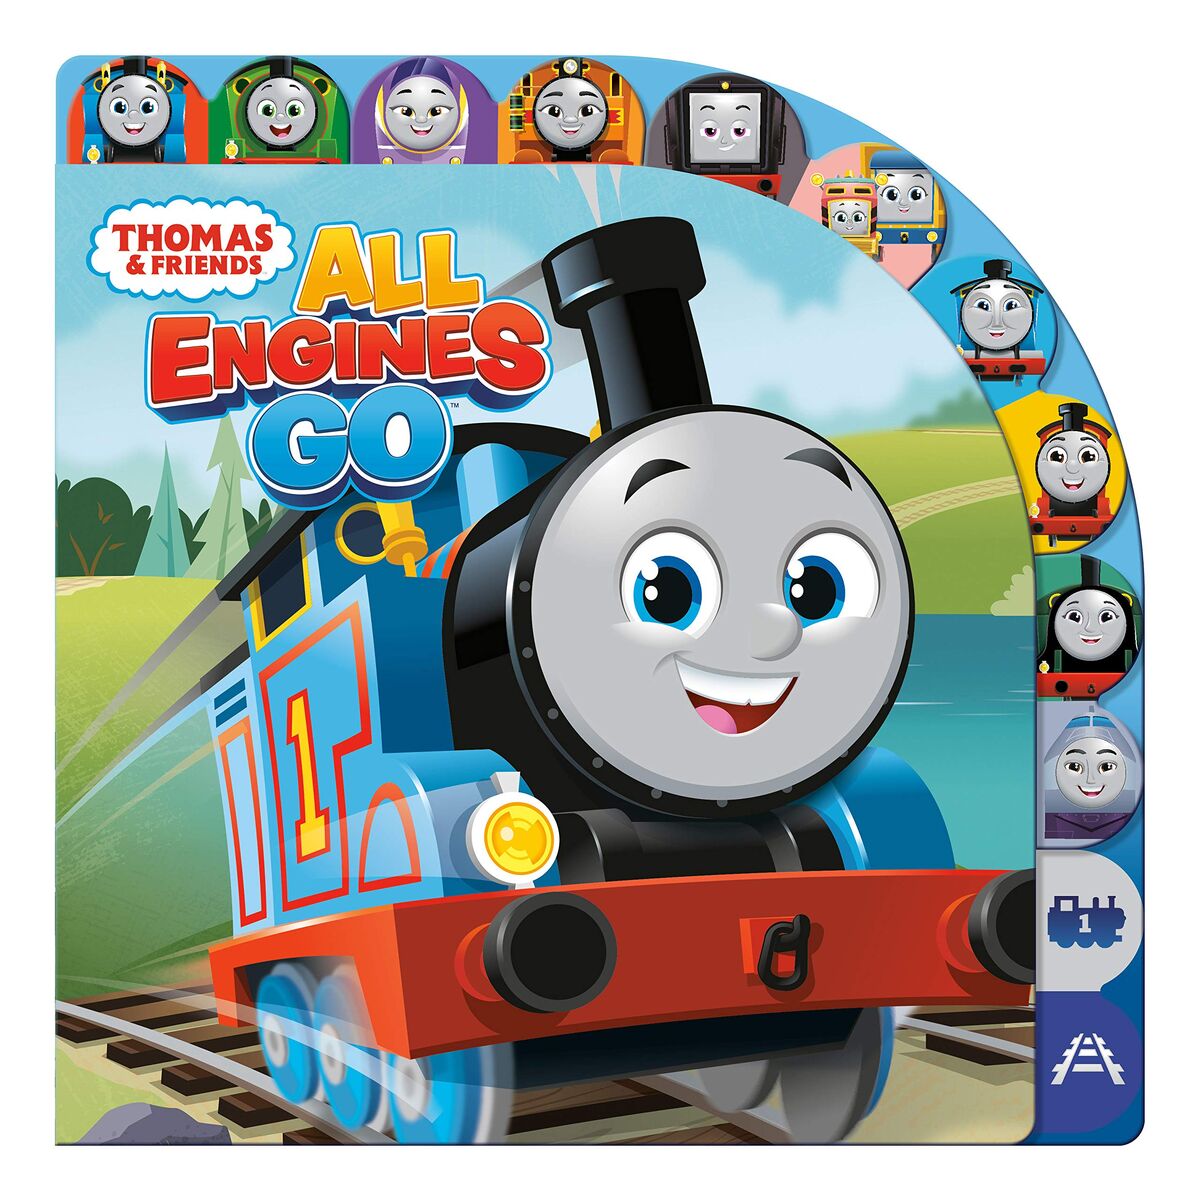 Thomas & Friends: All Engines Go. Thomas & Friends: All Engines Go